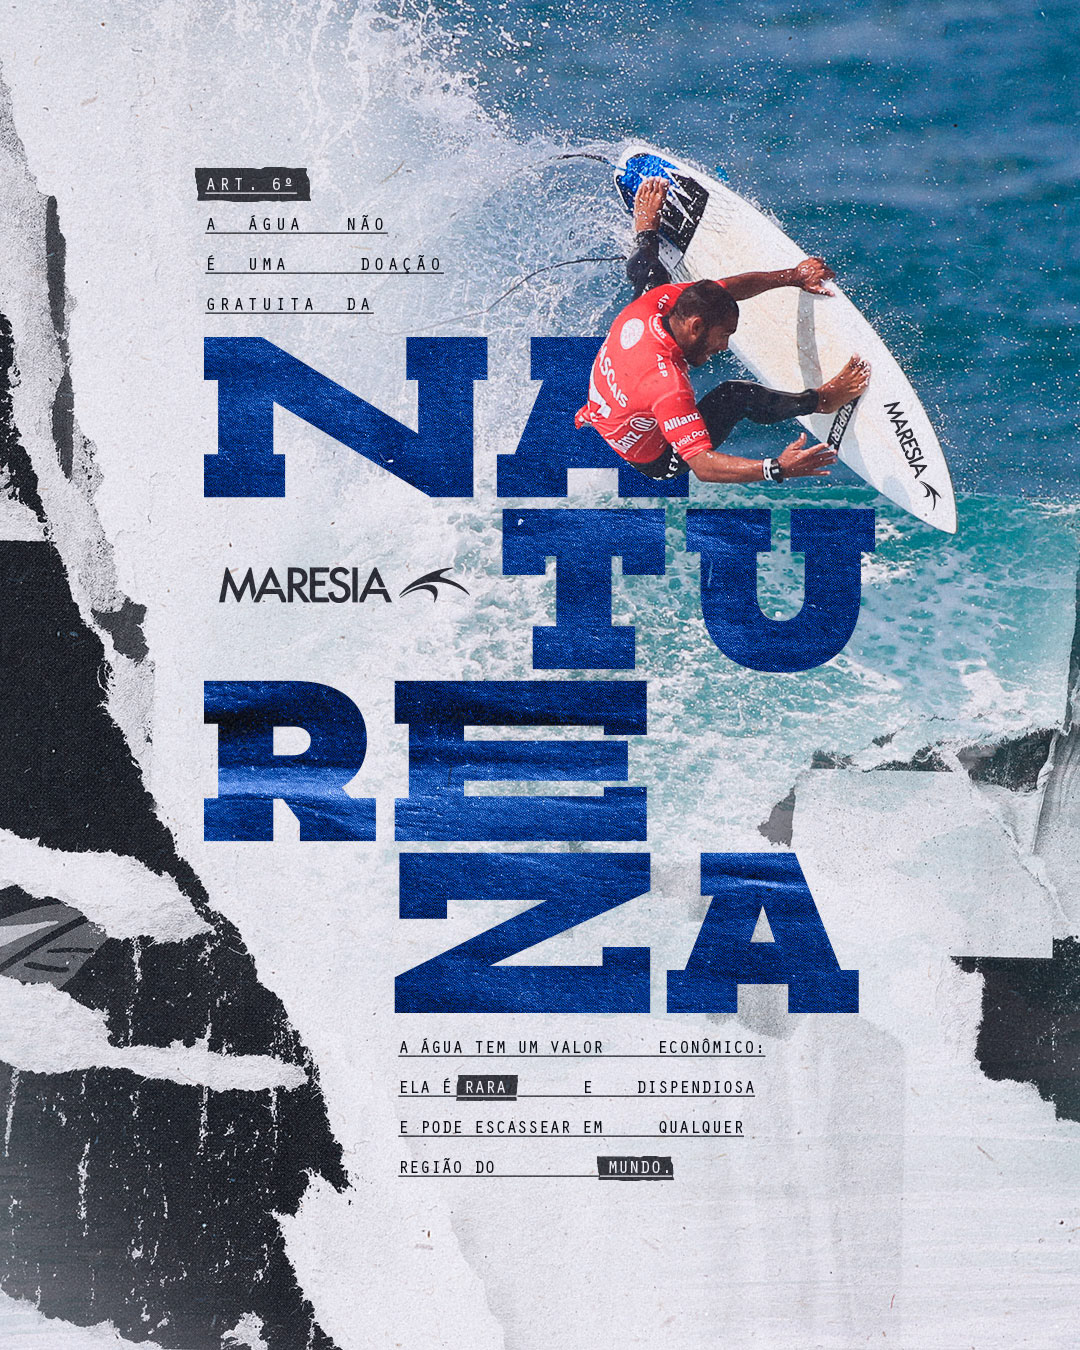 agua onu design Surf natureza collage poster wave onda Maresia